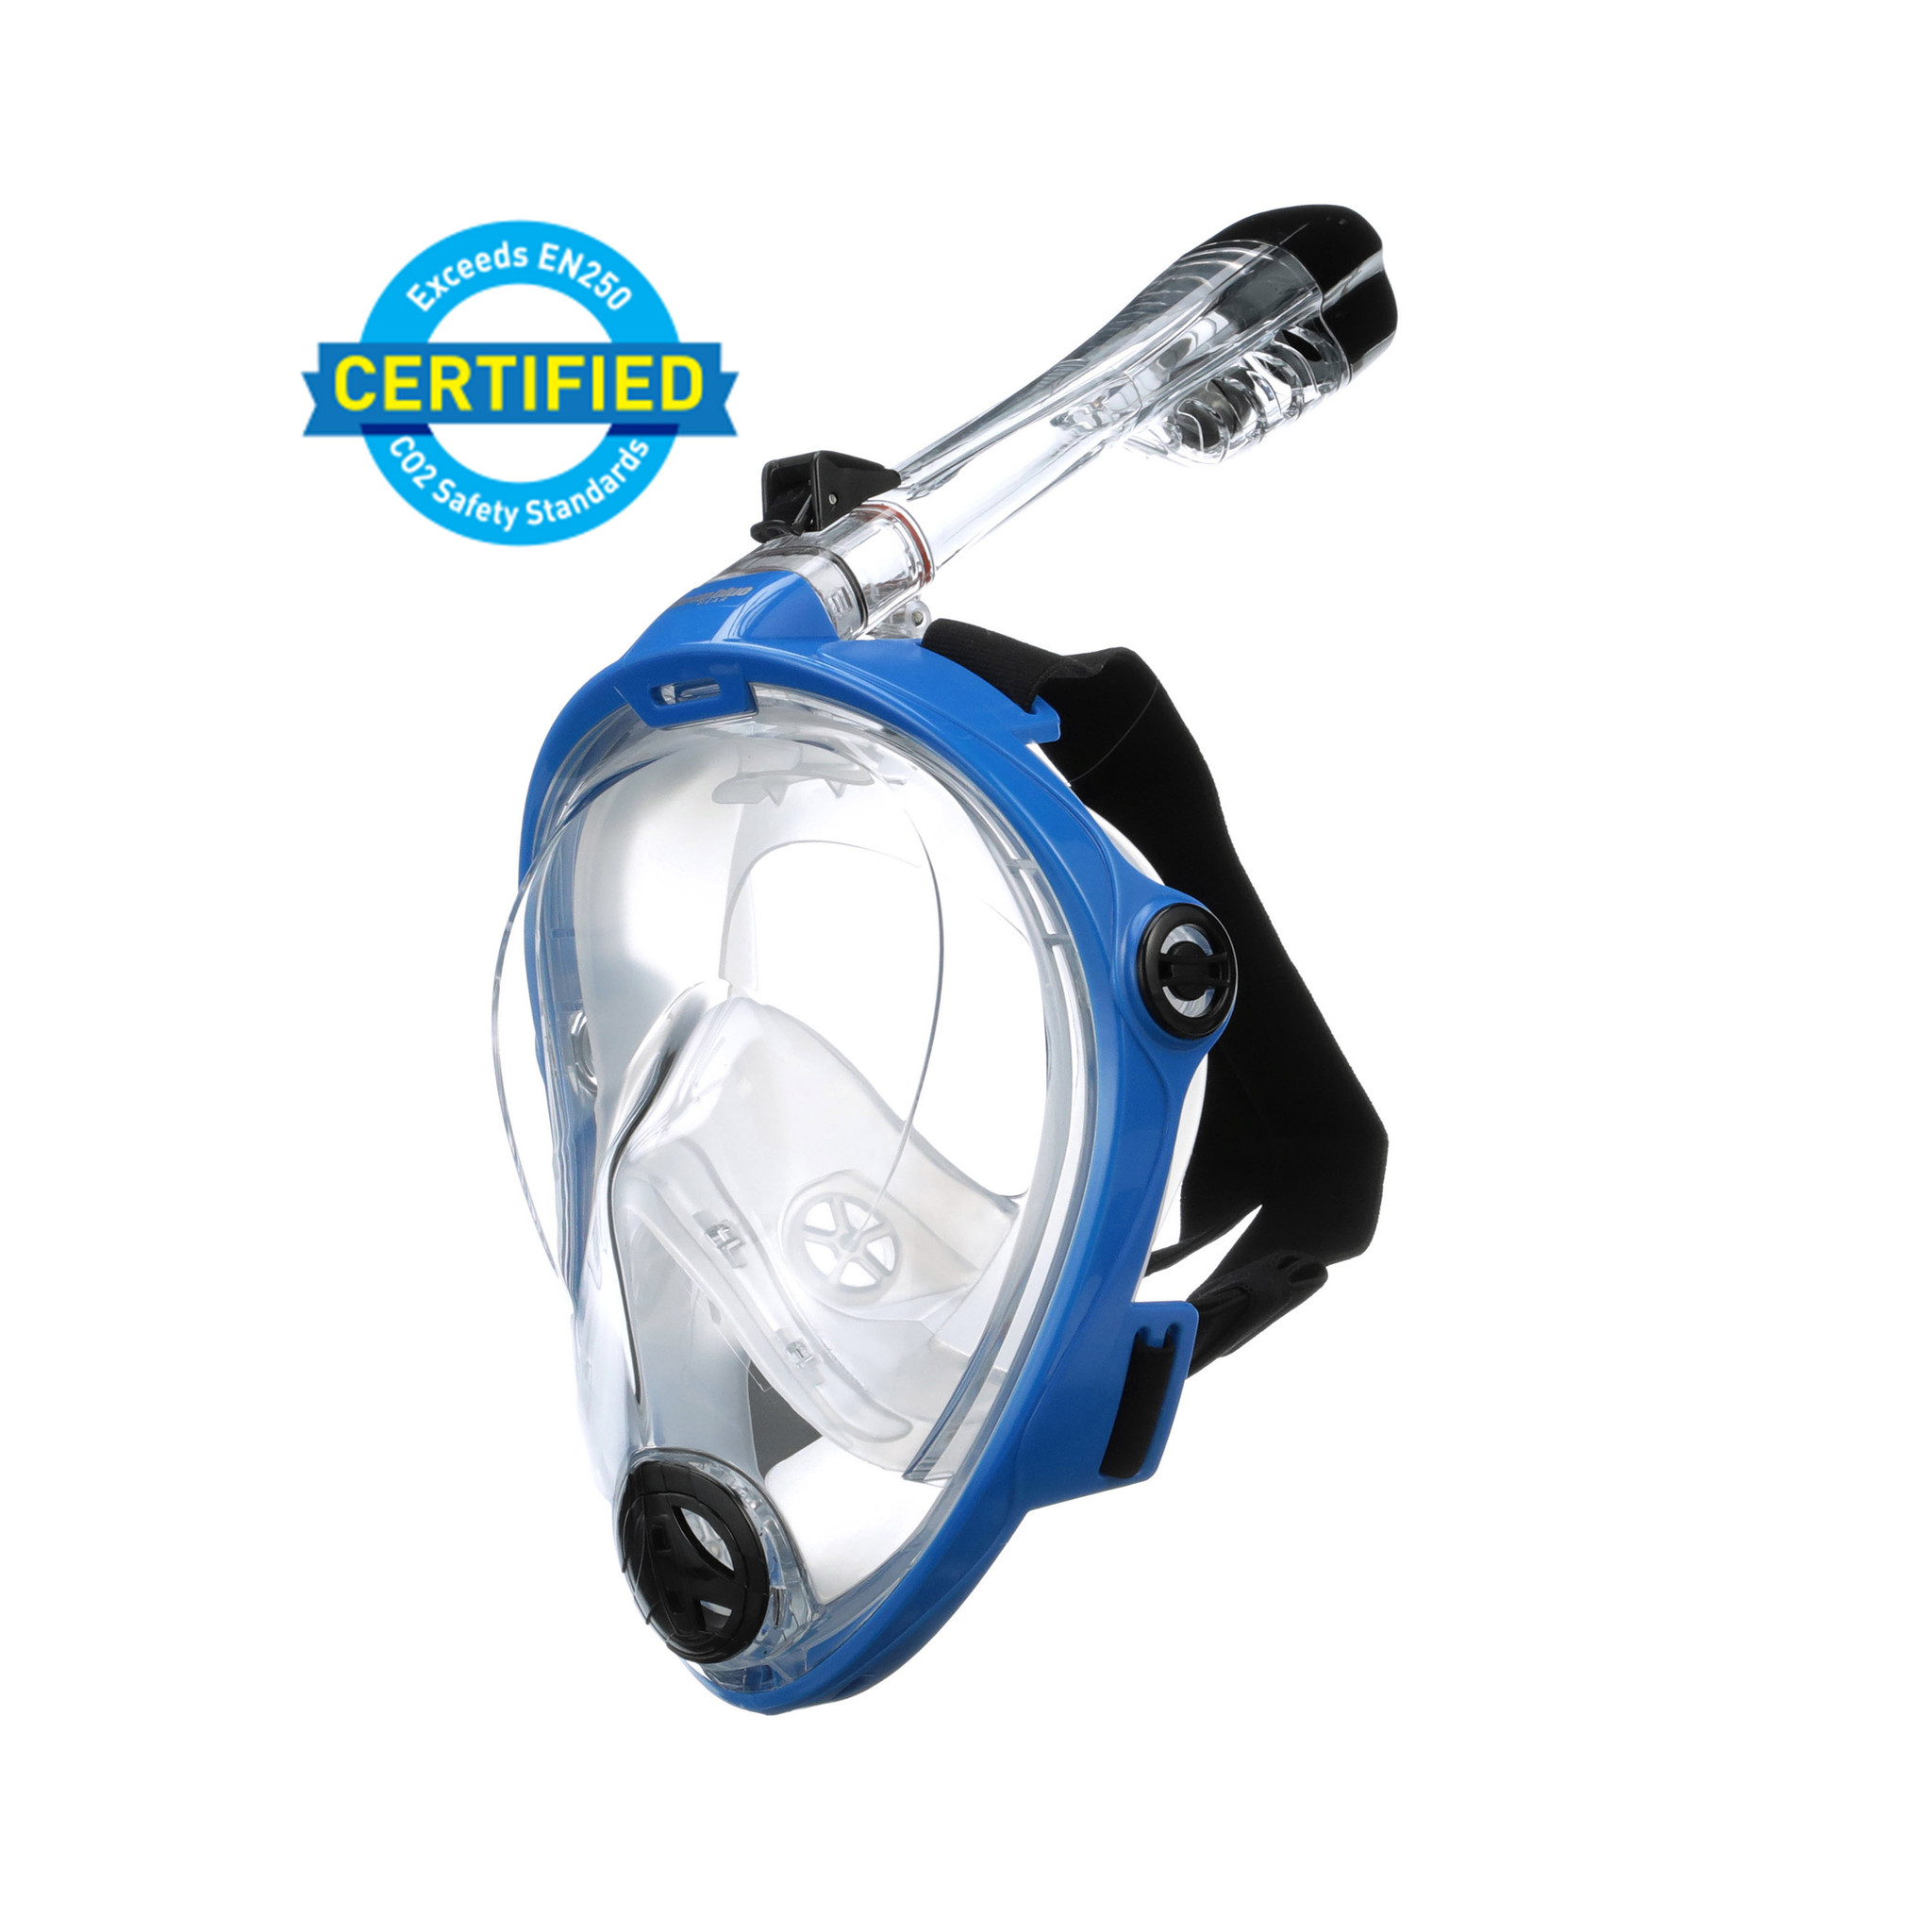 Vista Vue II - Snorkel Mask by Deep Blue Gear